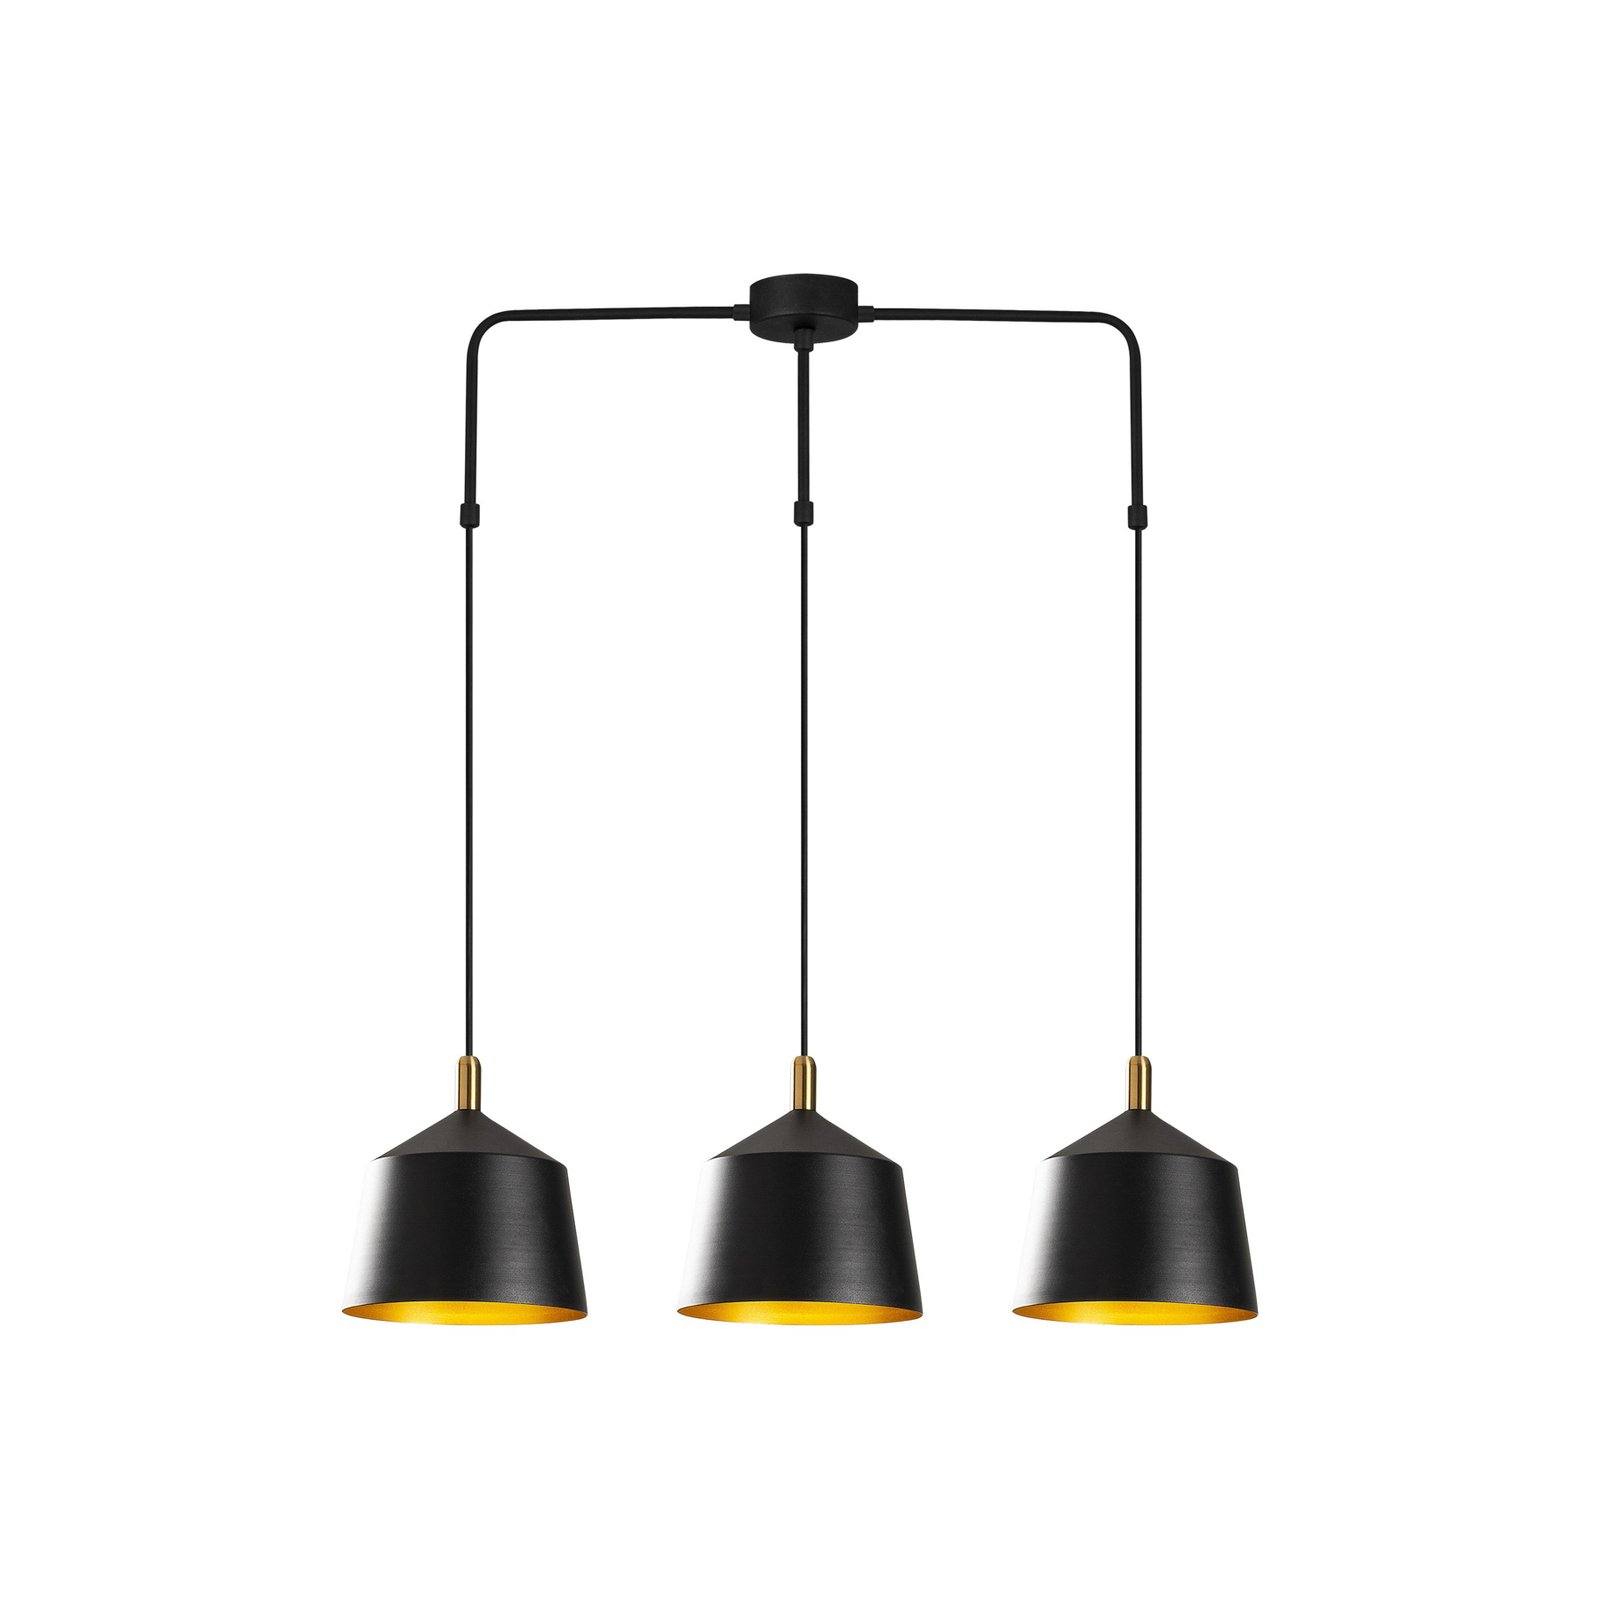 Hanglamp Saglam 3778 3-lamps lineair zwart/goud